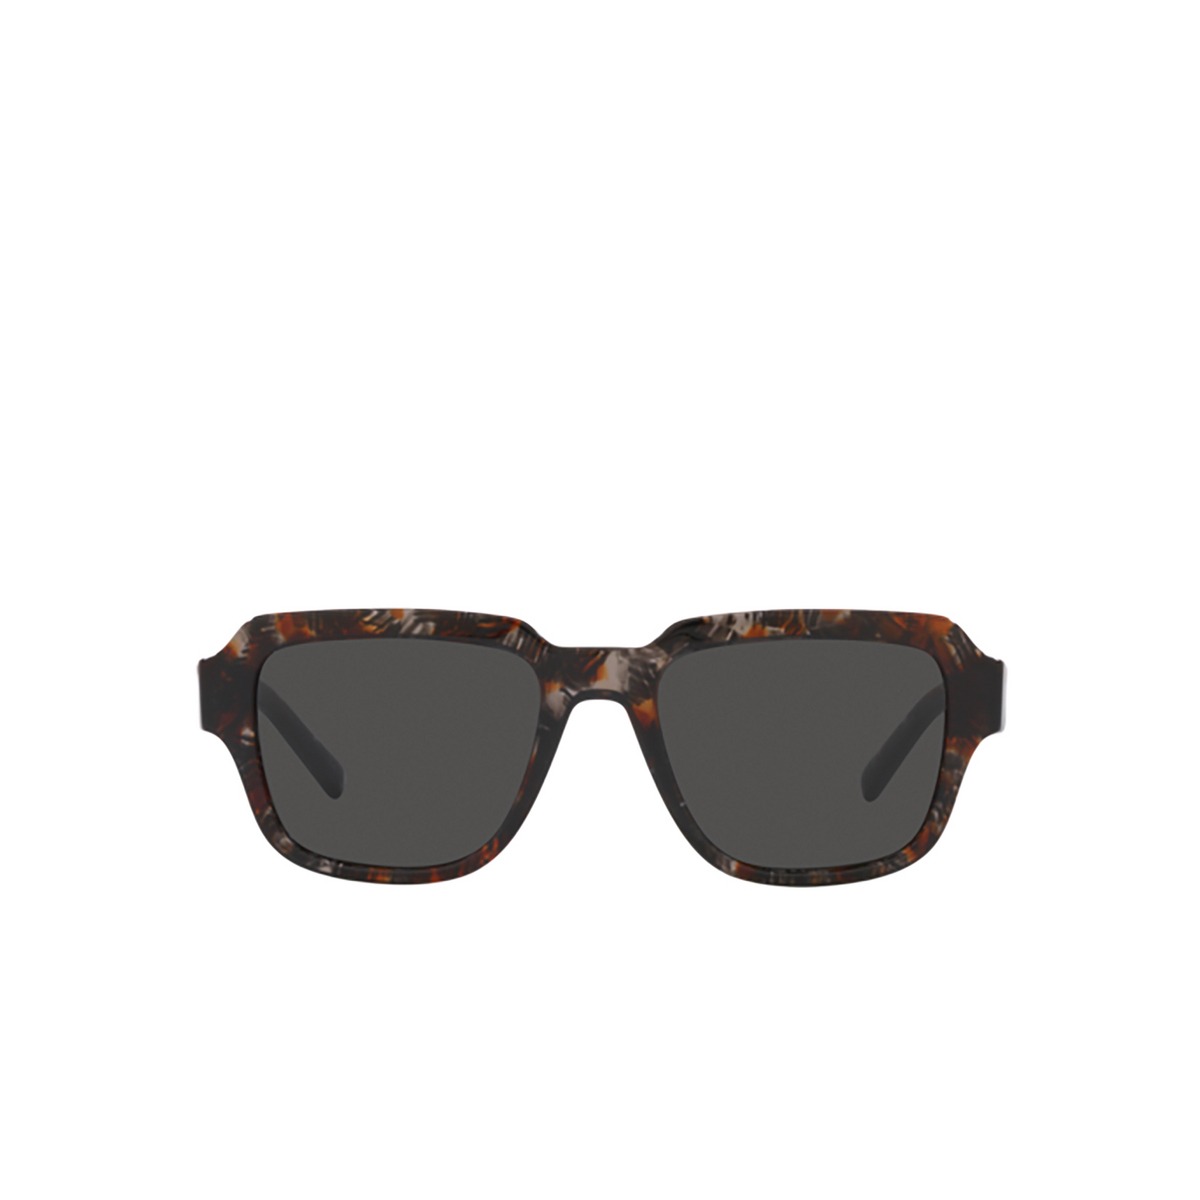 Dolce & Gabbana DG4402 Sunglasses 335687 Grey havana - front view